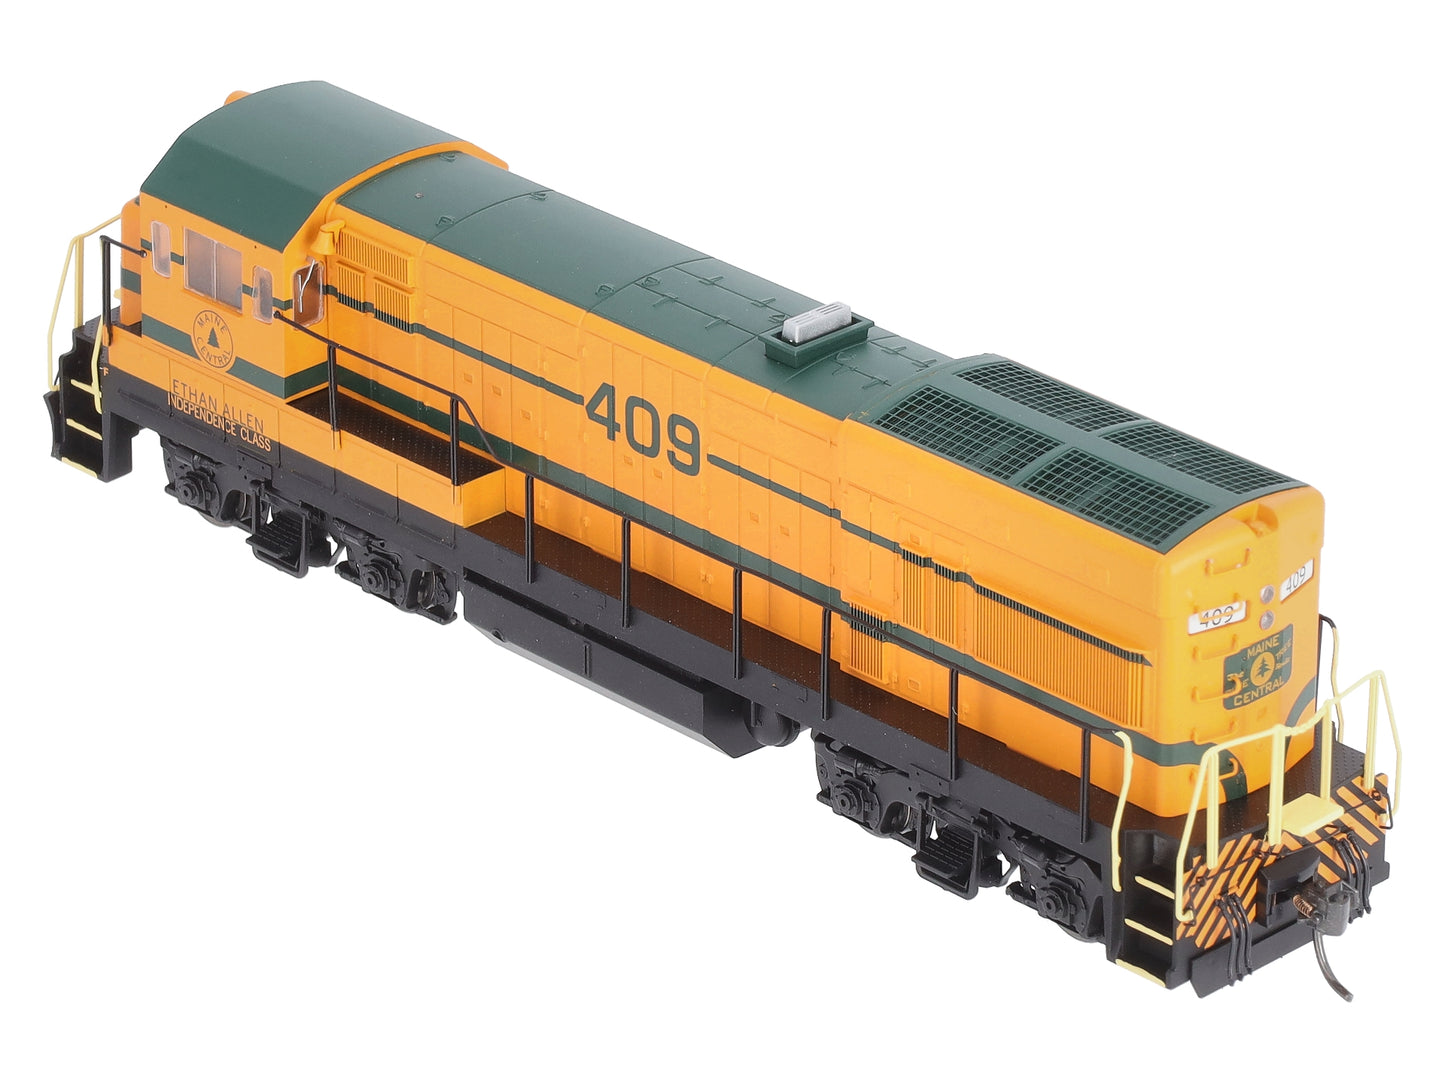 InterMountain 49451-04 HO Scale Maine Central Eagle U18B Locomotive #409 LN/Box